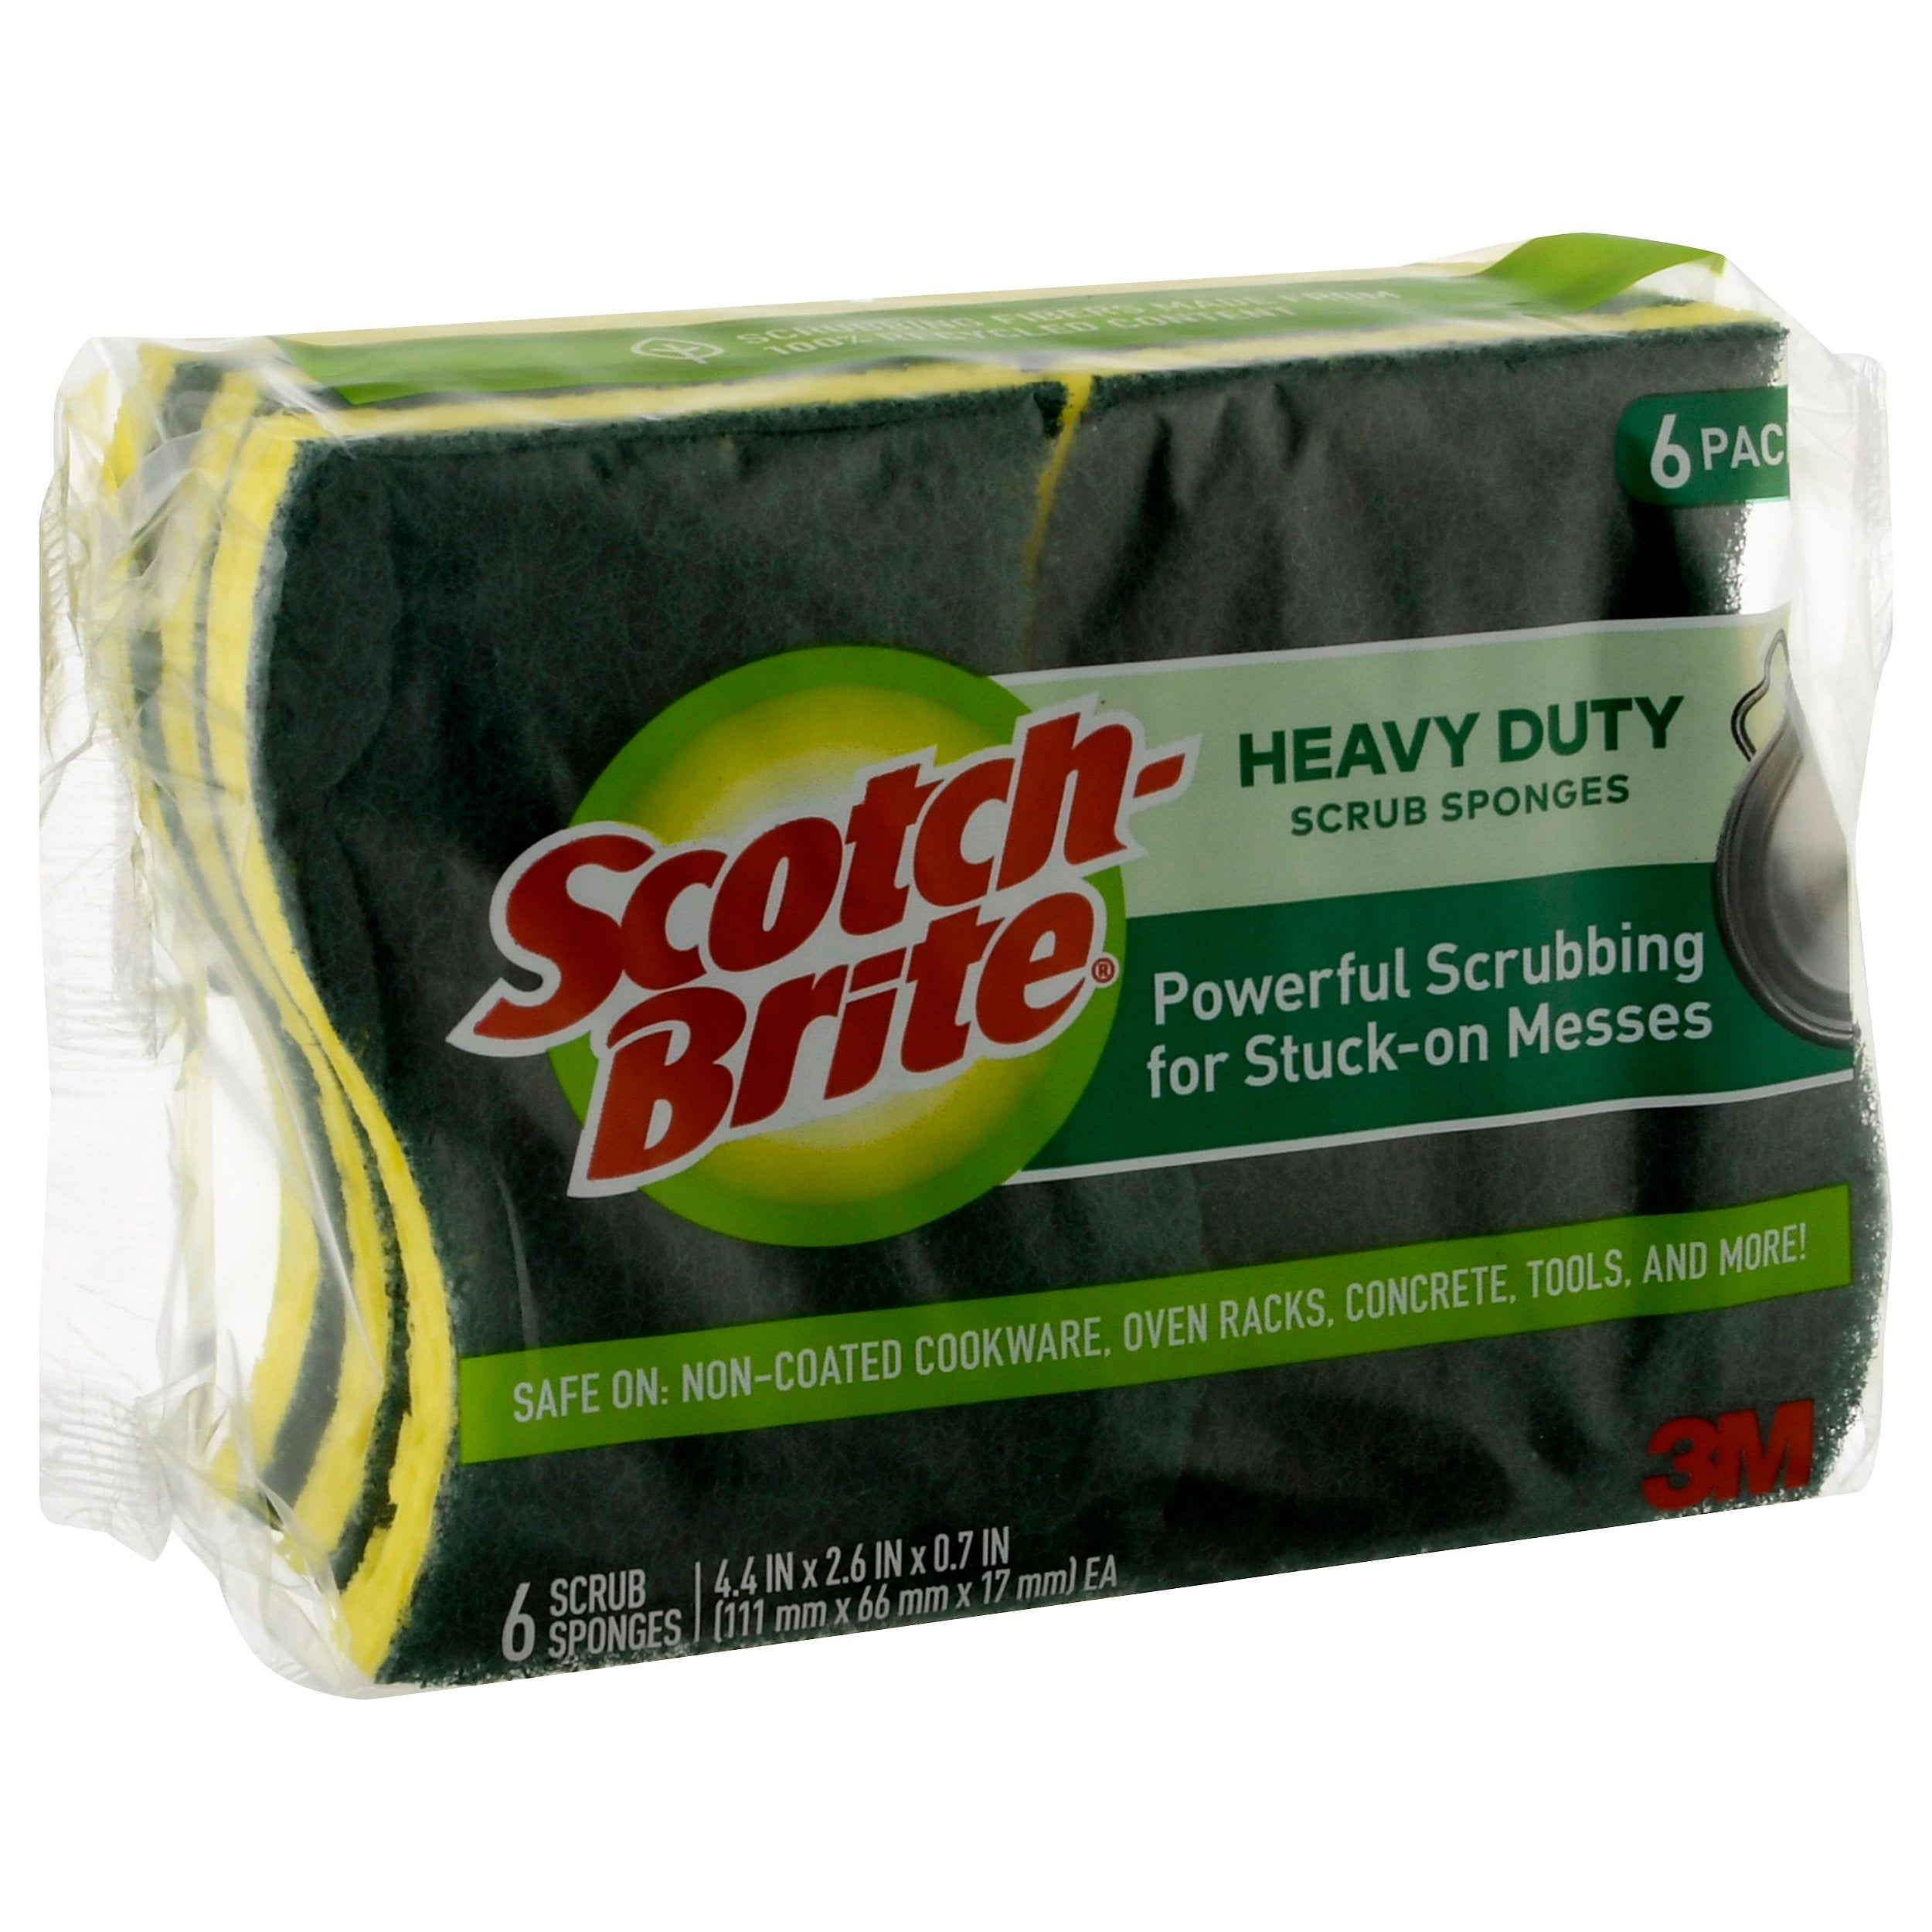 Scotch-Brite Heavy Duty Scrub Sponges - Shop Sponges & Scrubbers